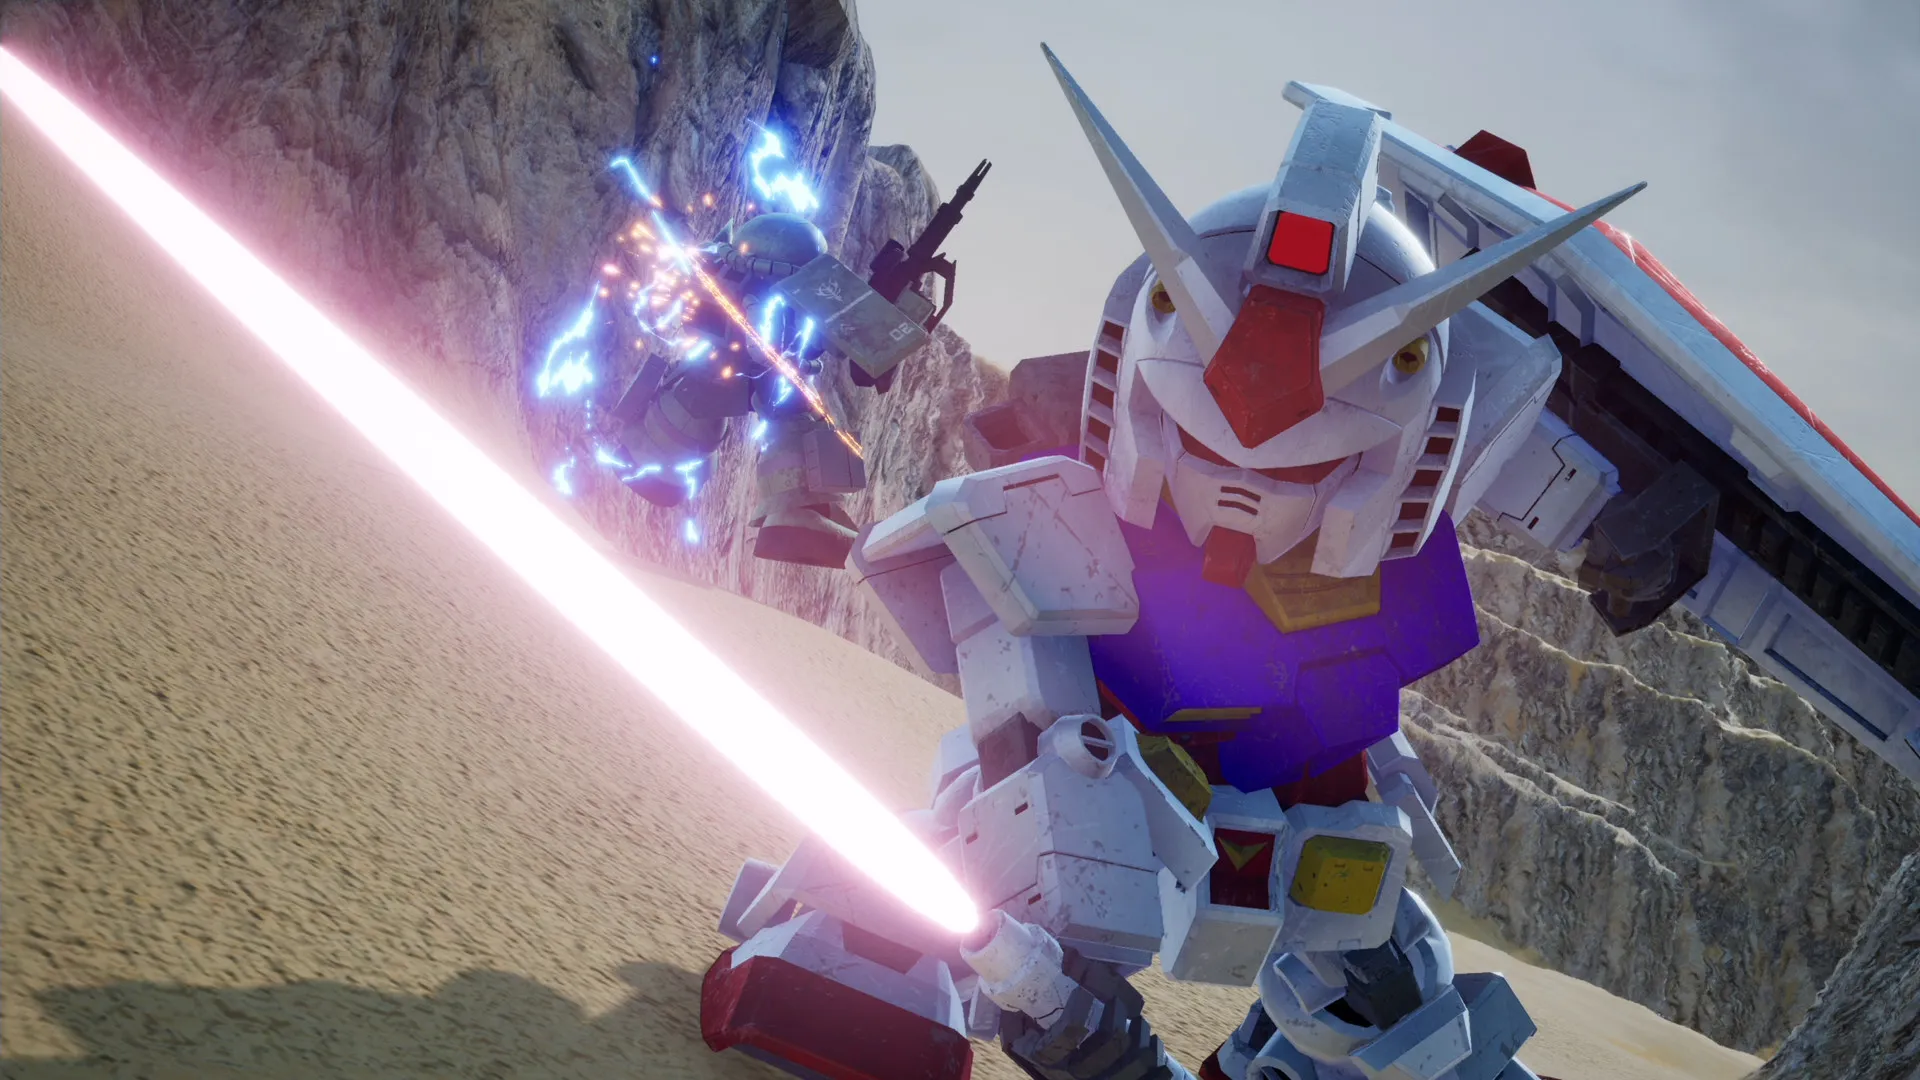 SD Gundam Battle Alliance, Wild Hearts Early Access on Xbox Game Pass